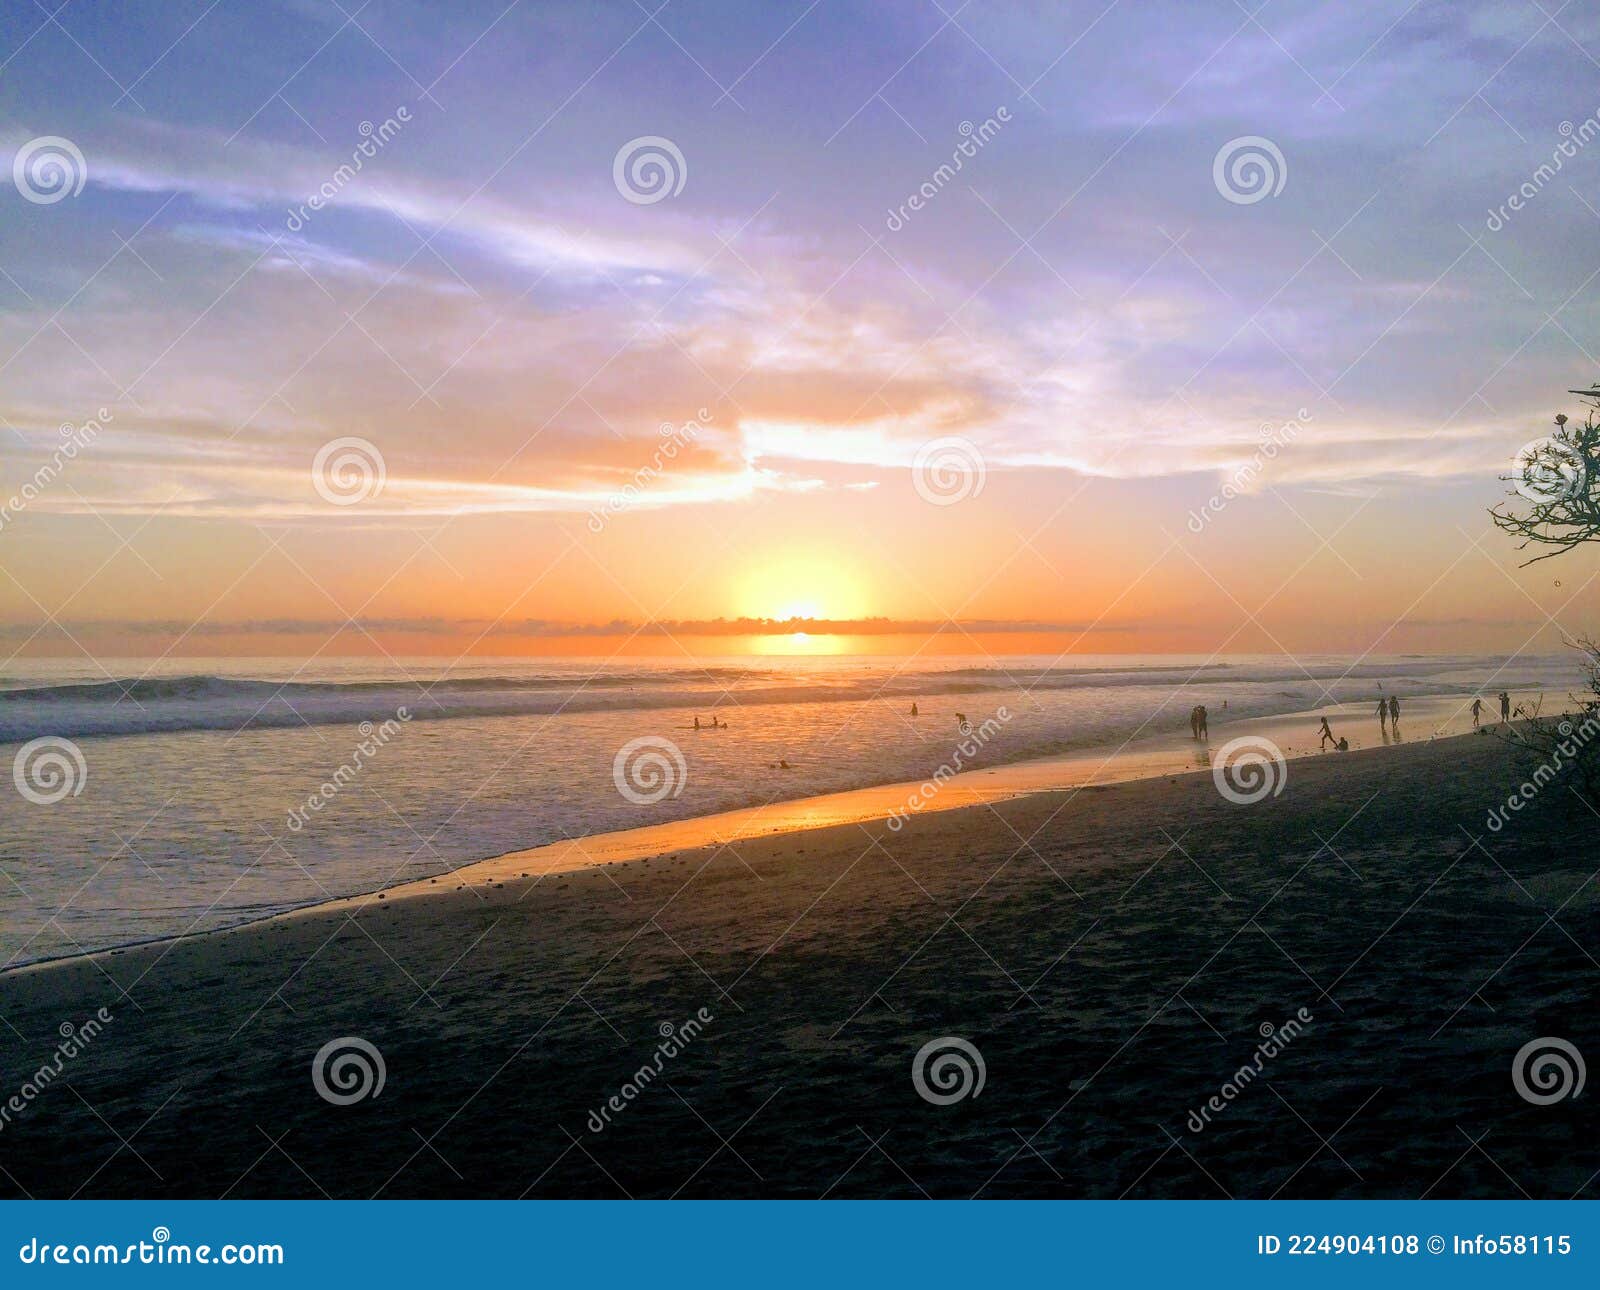 sunset at santa teresa beach